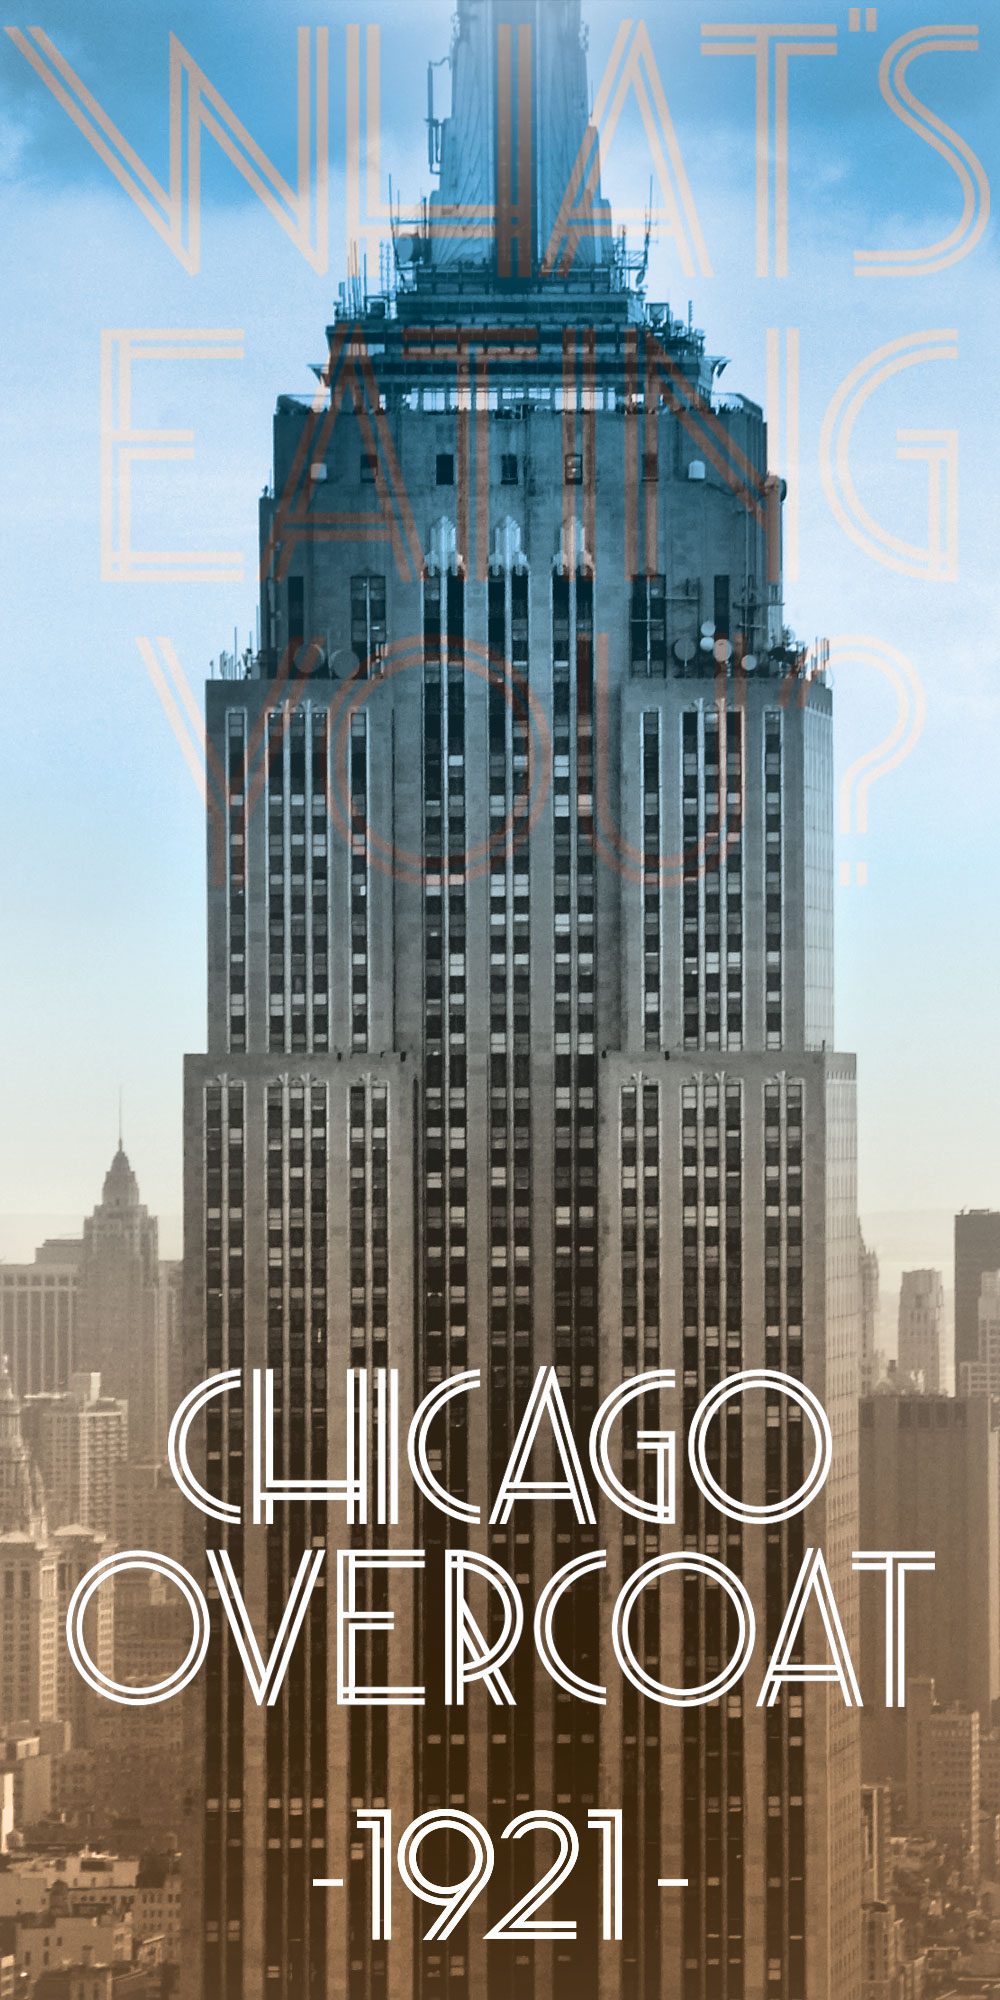 chicago overcoat font